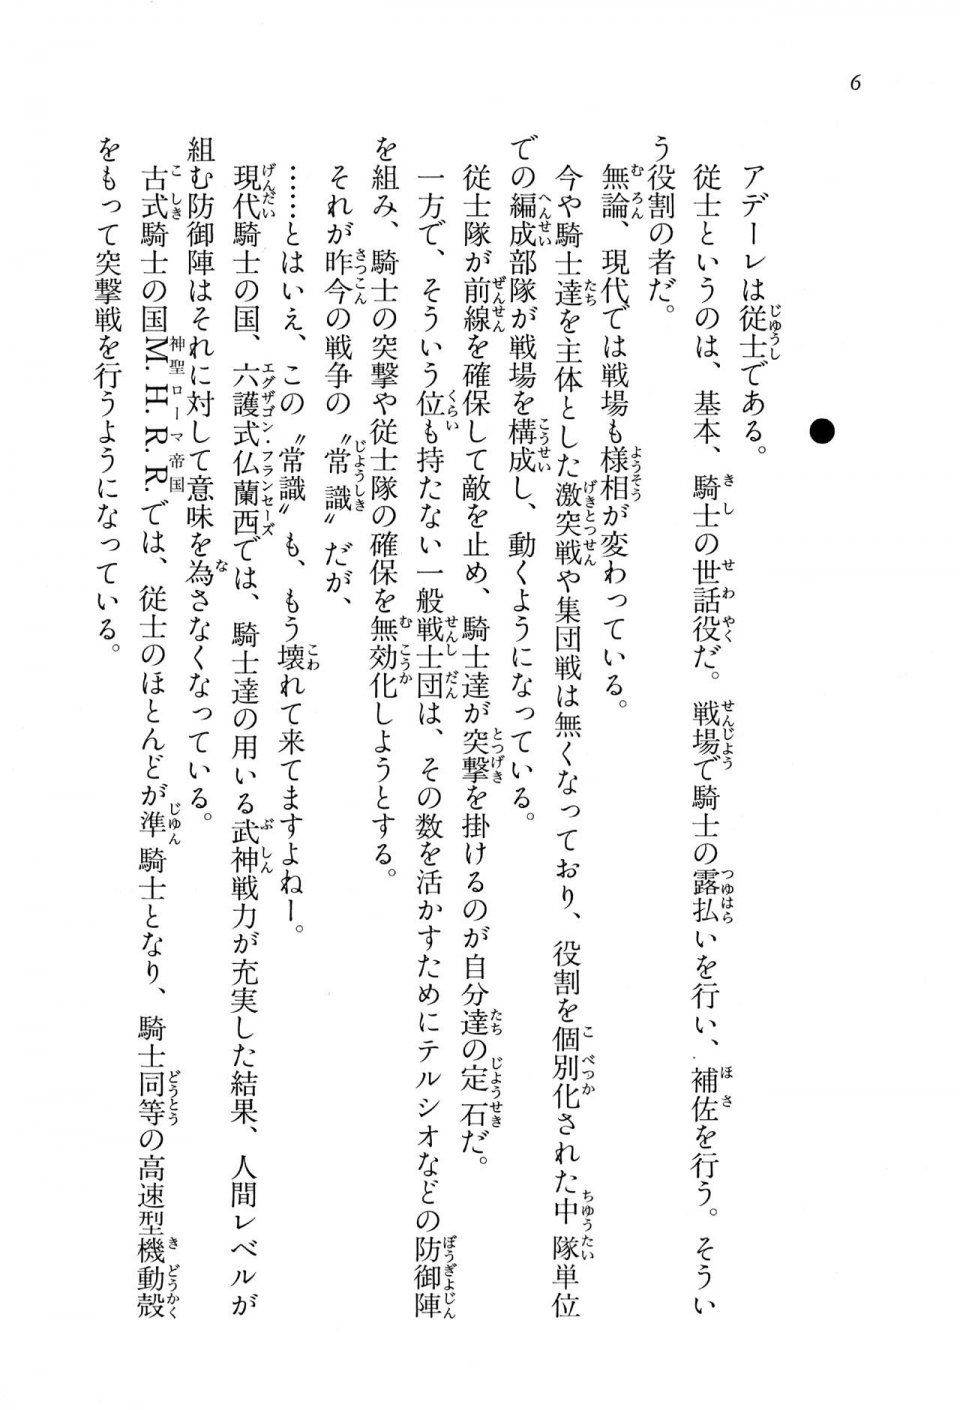 Kyoukai Senjou no Horizon BD Special Mininovel Vol 6(3B) - Photo #10